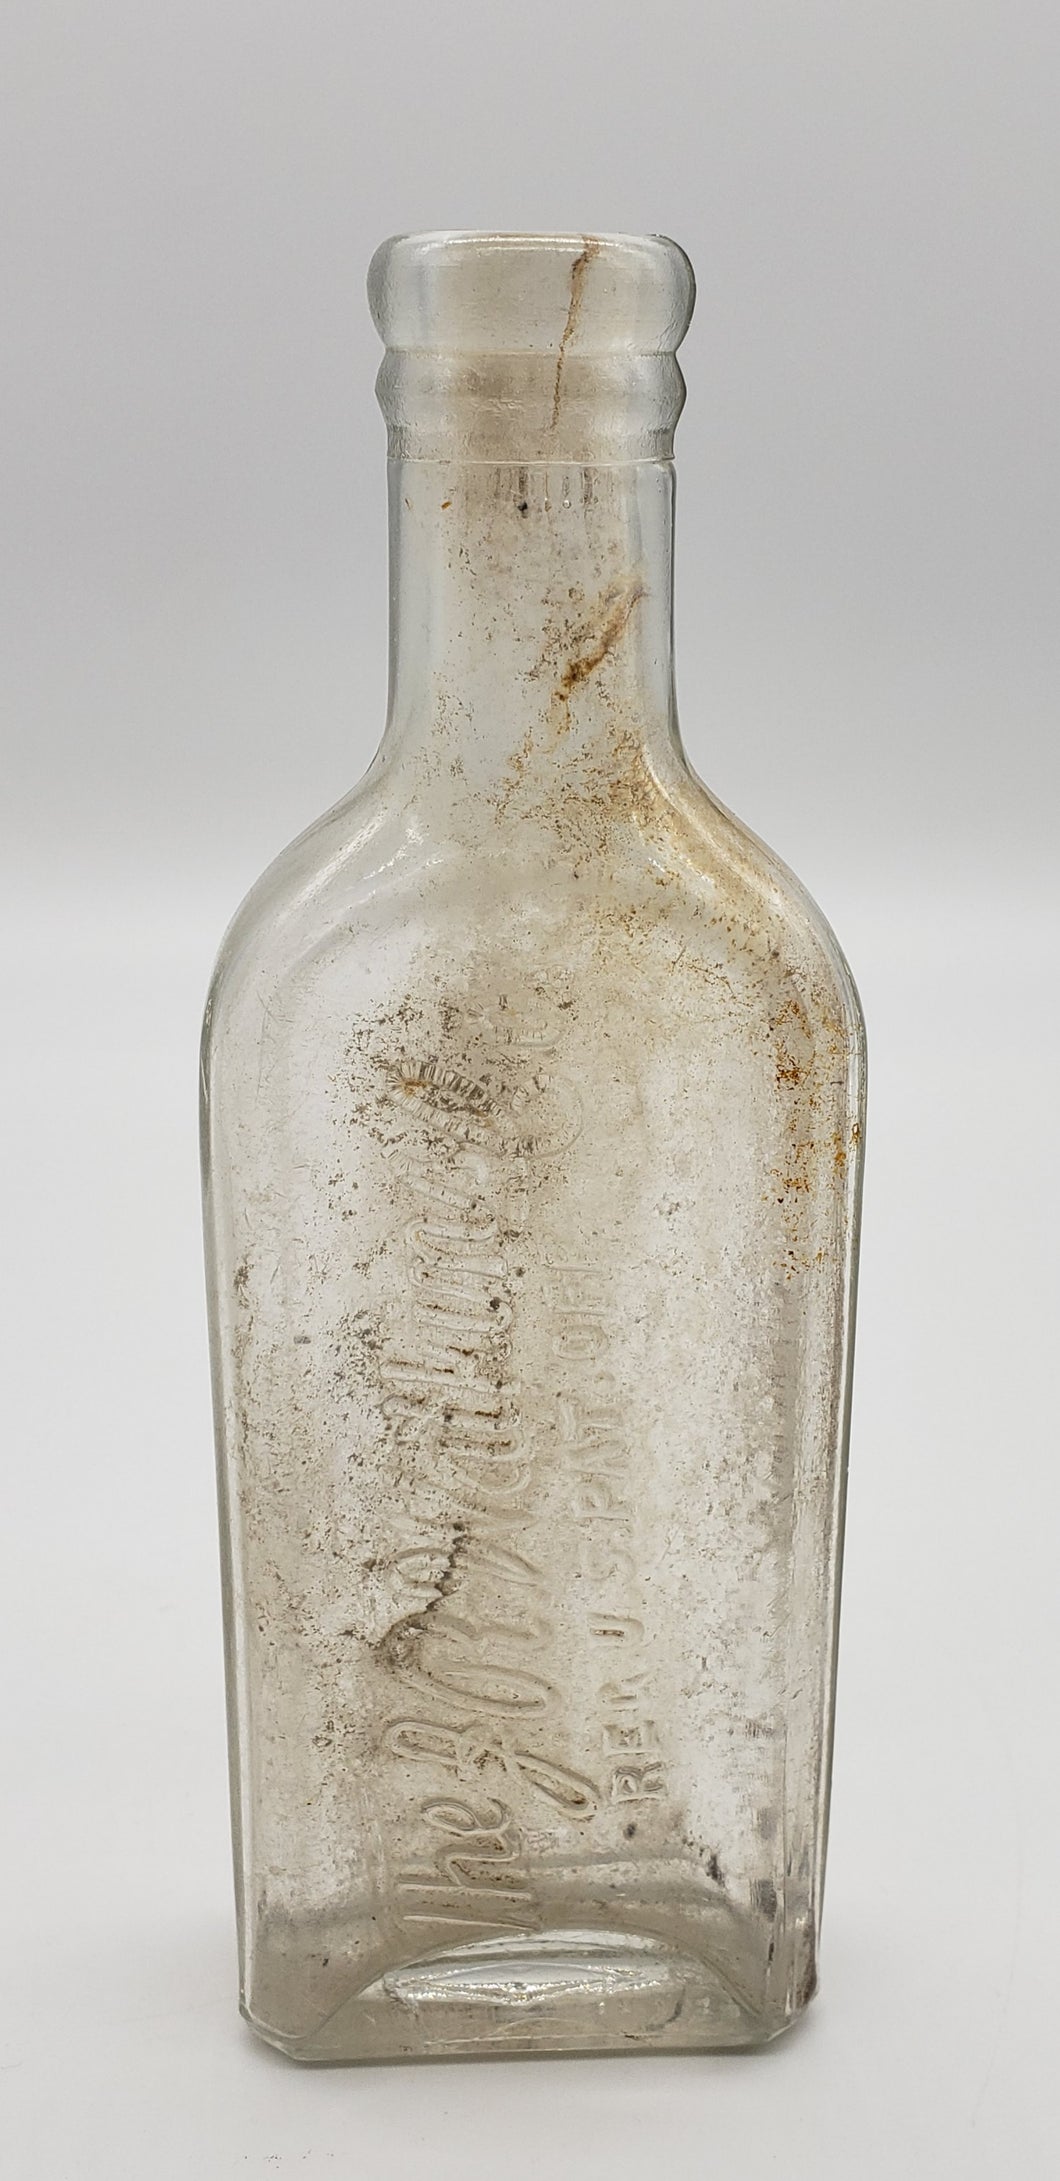 JR Watkins vintage glass bottle